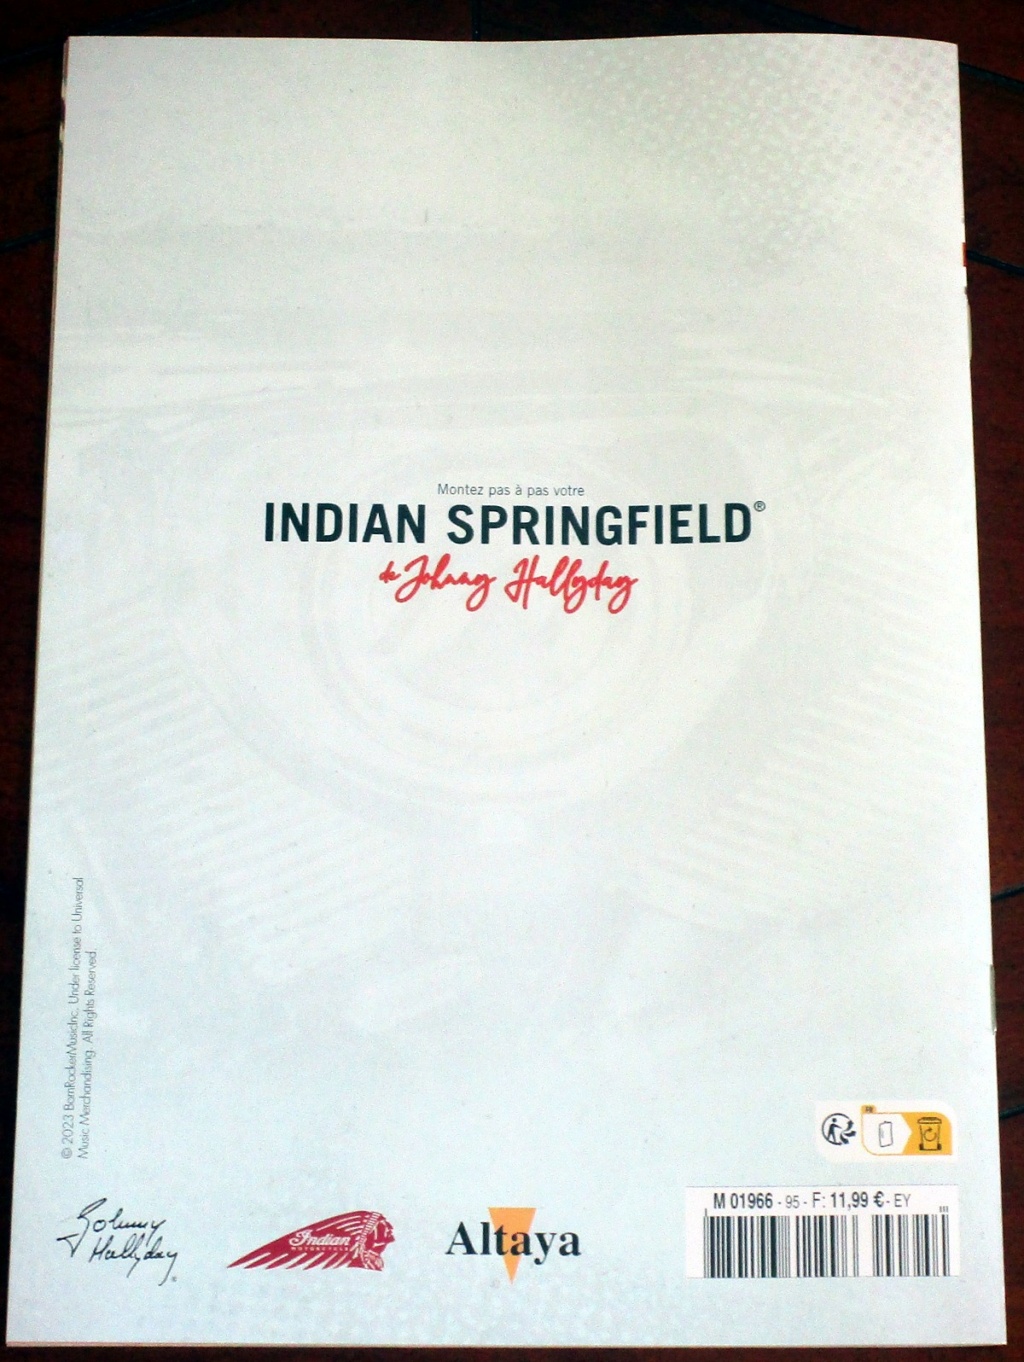 Altaya:Indian Springfield de JH n°95 027-a136